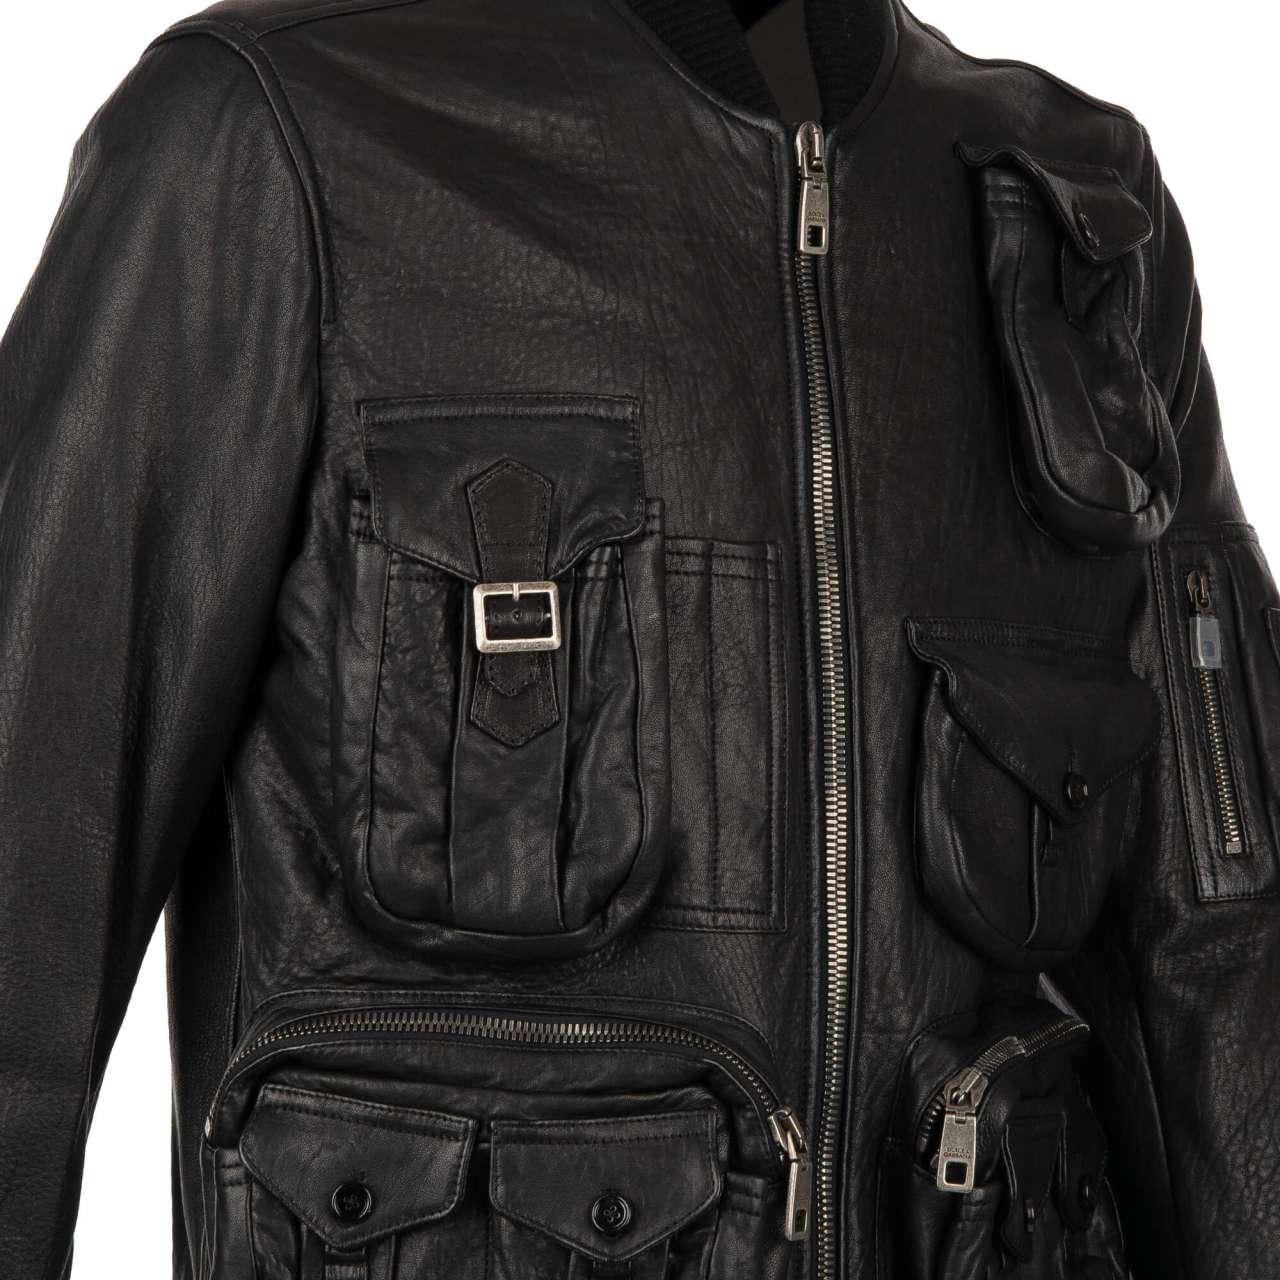 Dolce & Gabbana - Multi-Pocket Military Inspired Nappa Leather Jacket Black 46 For Sale 2